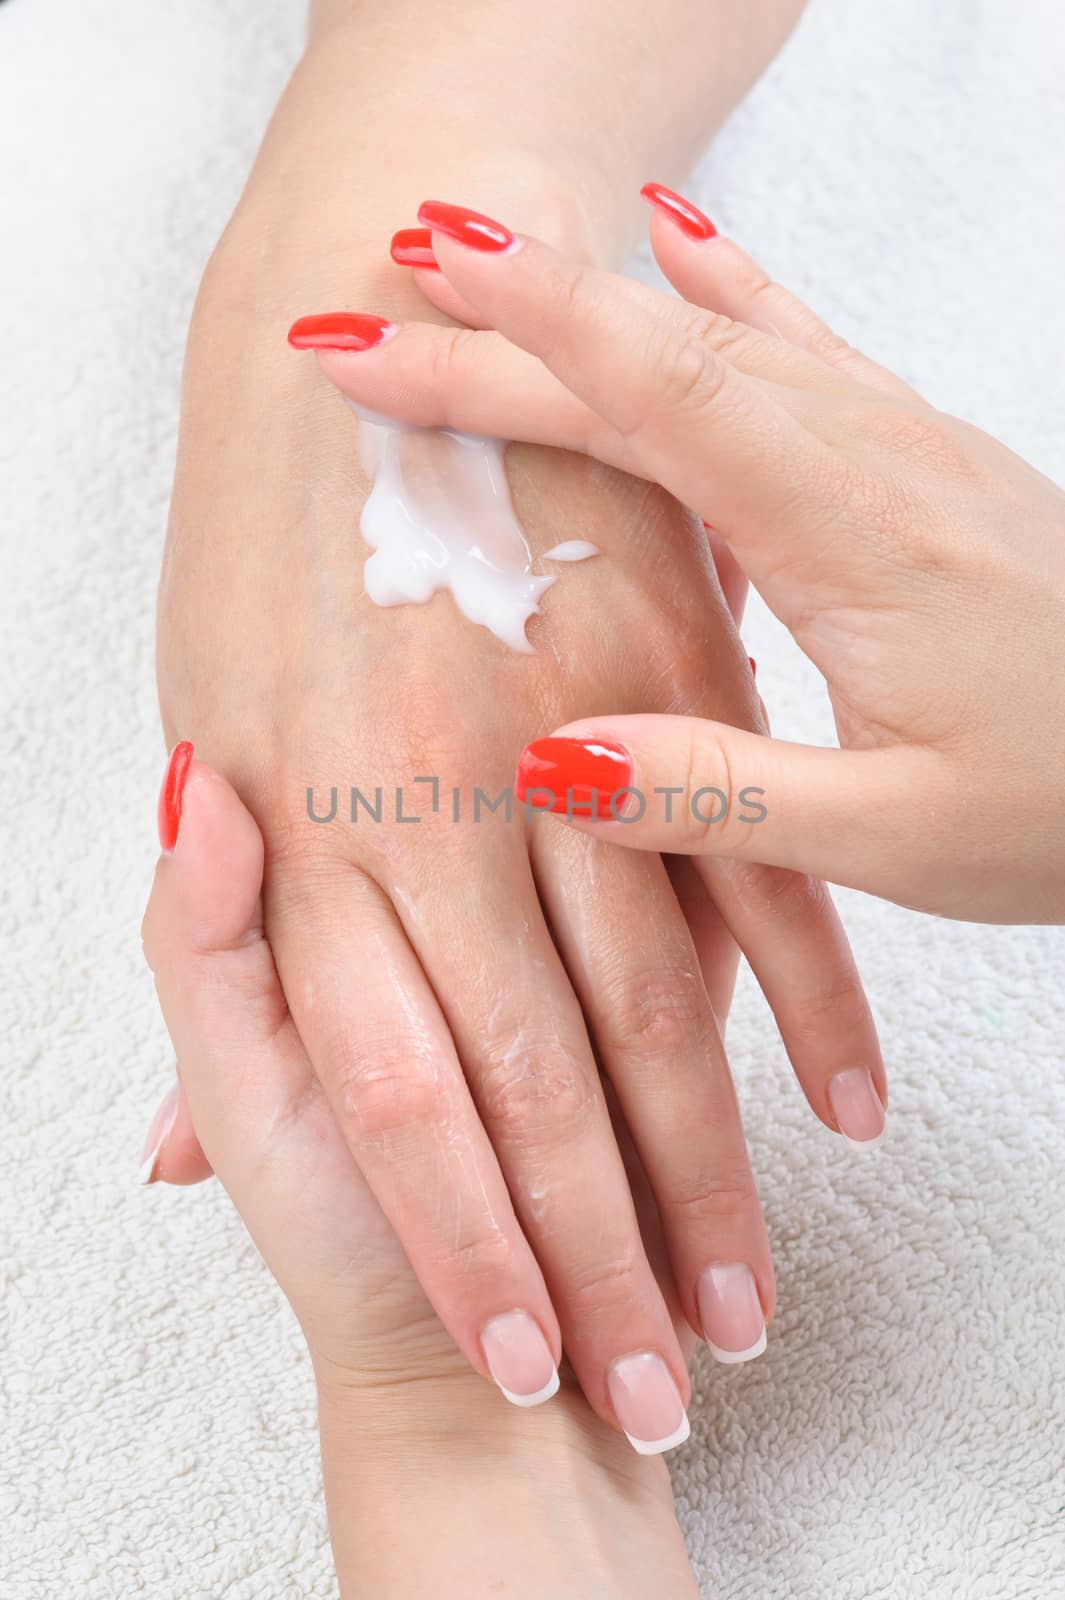 beauty salon, hands massage with moisturizing cream by starush